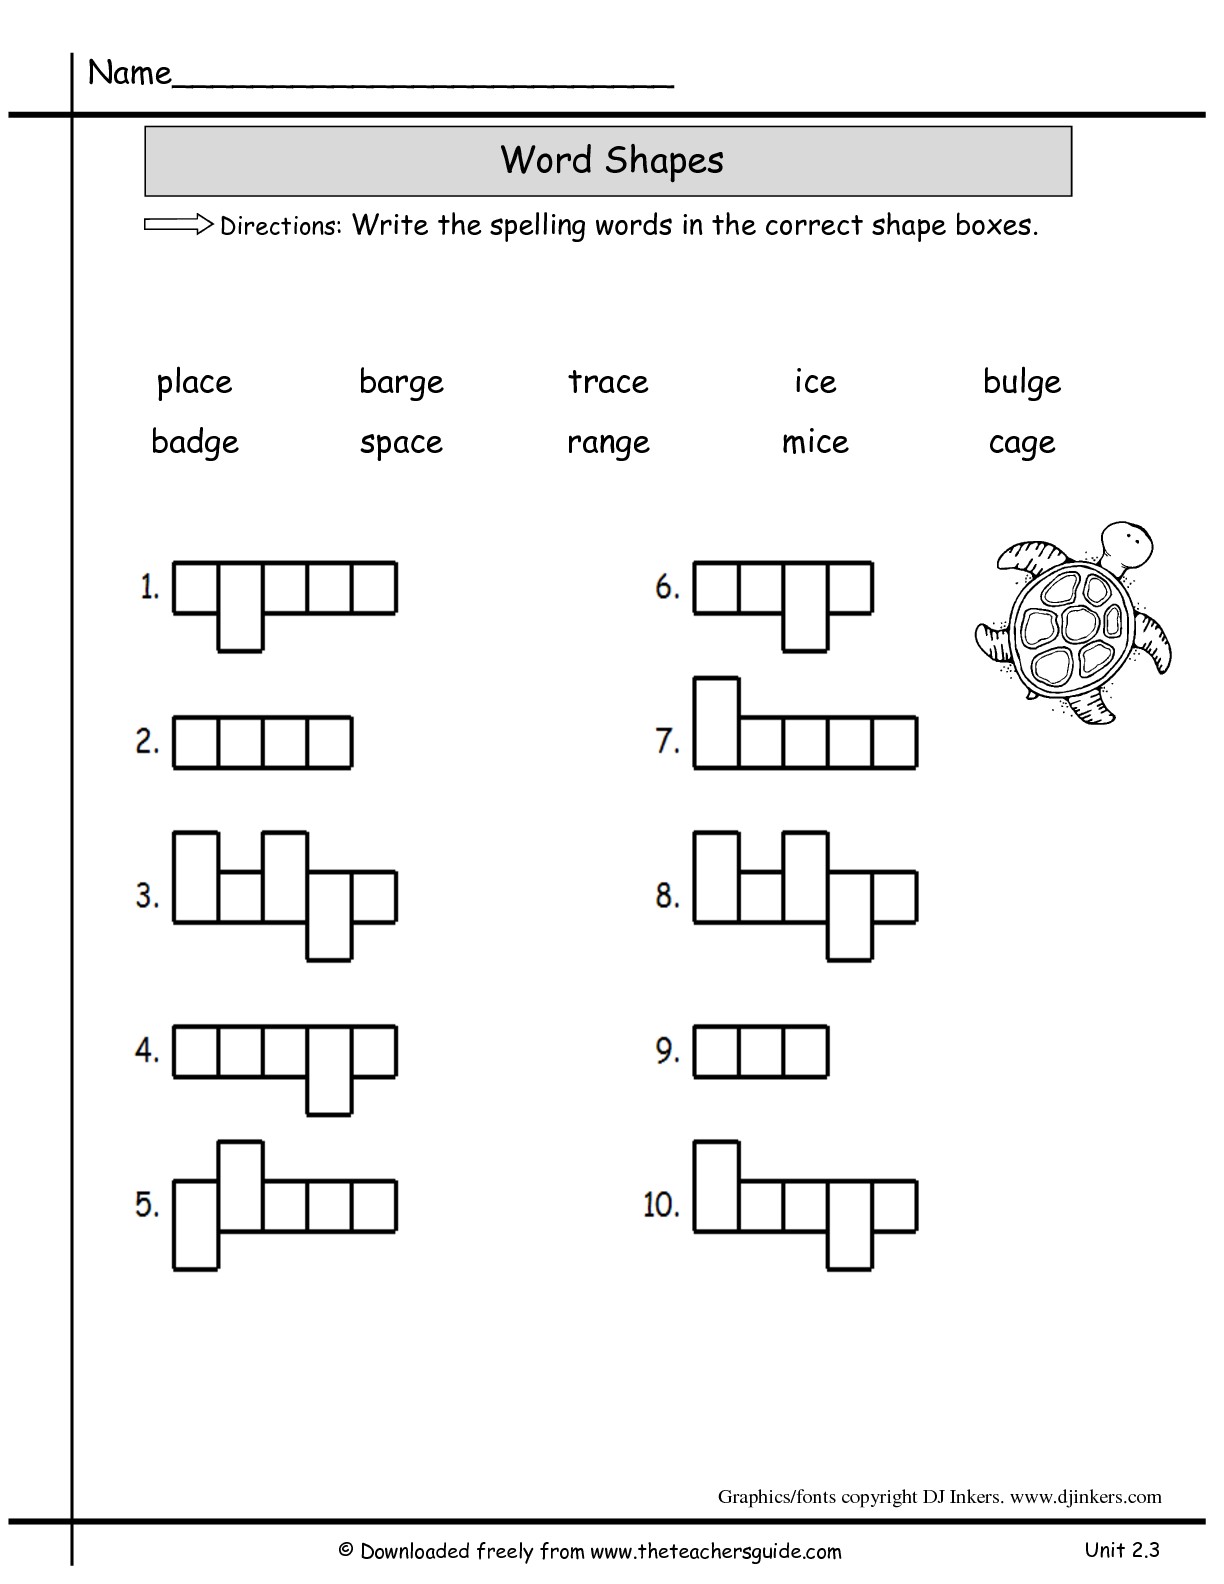 7 Best Images of Second Grade Shapes Worksheets - Math ...